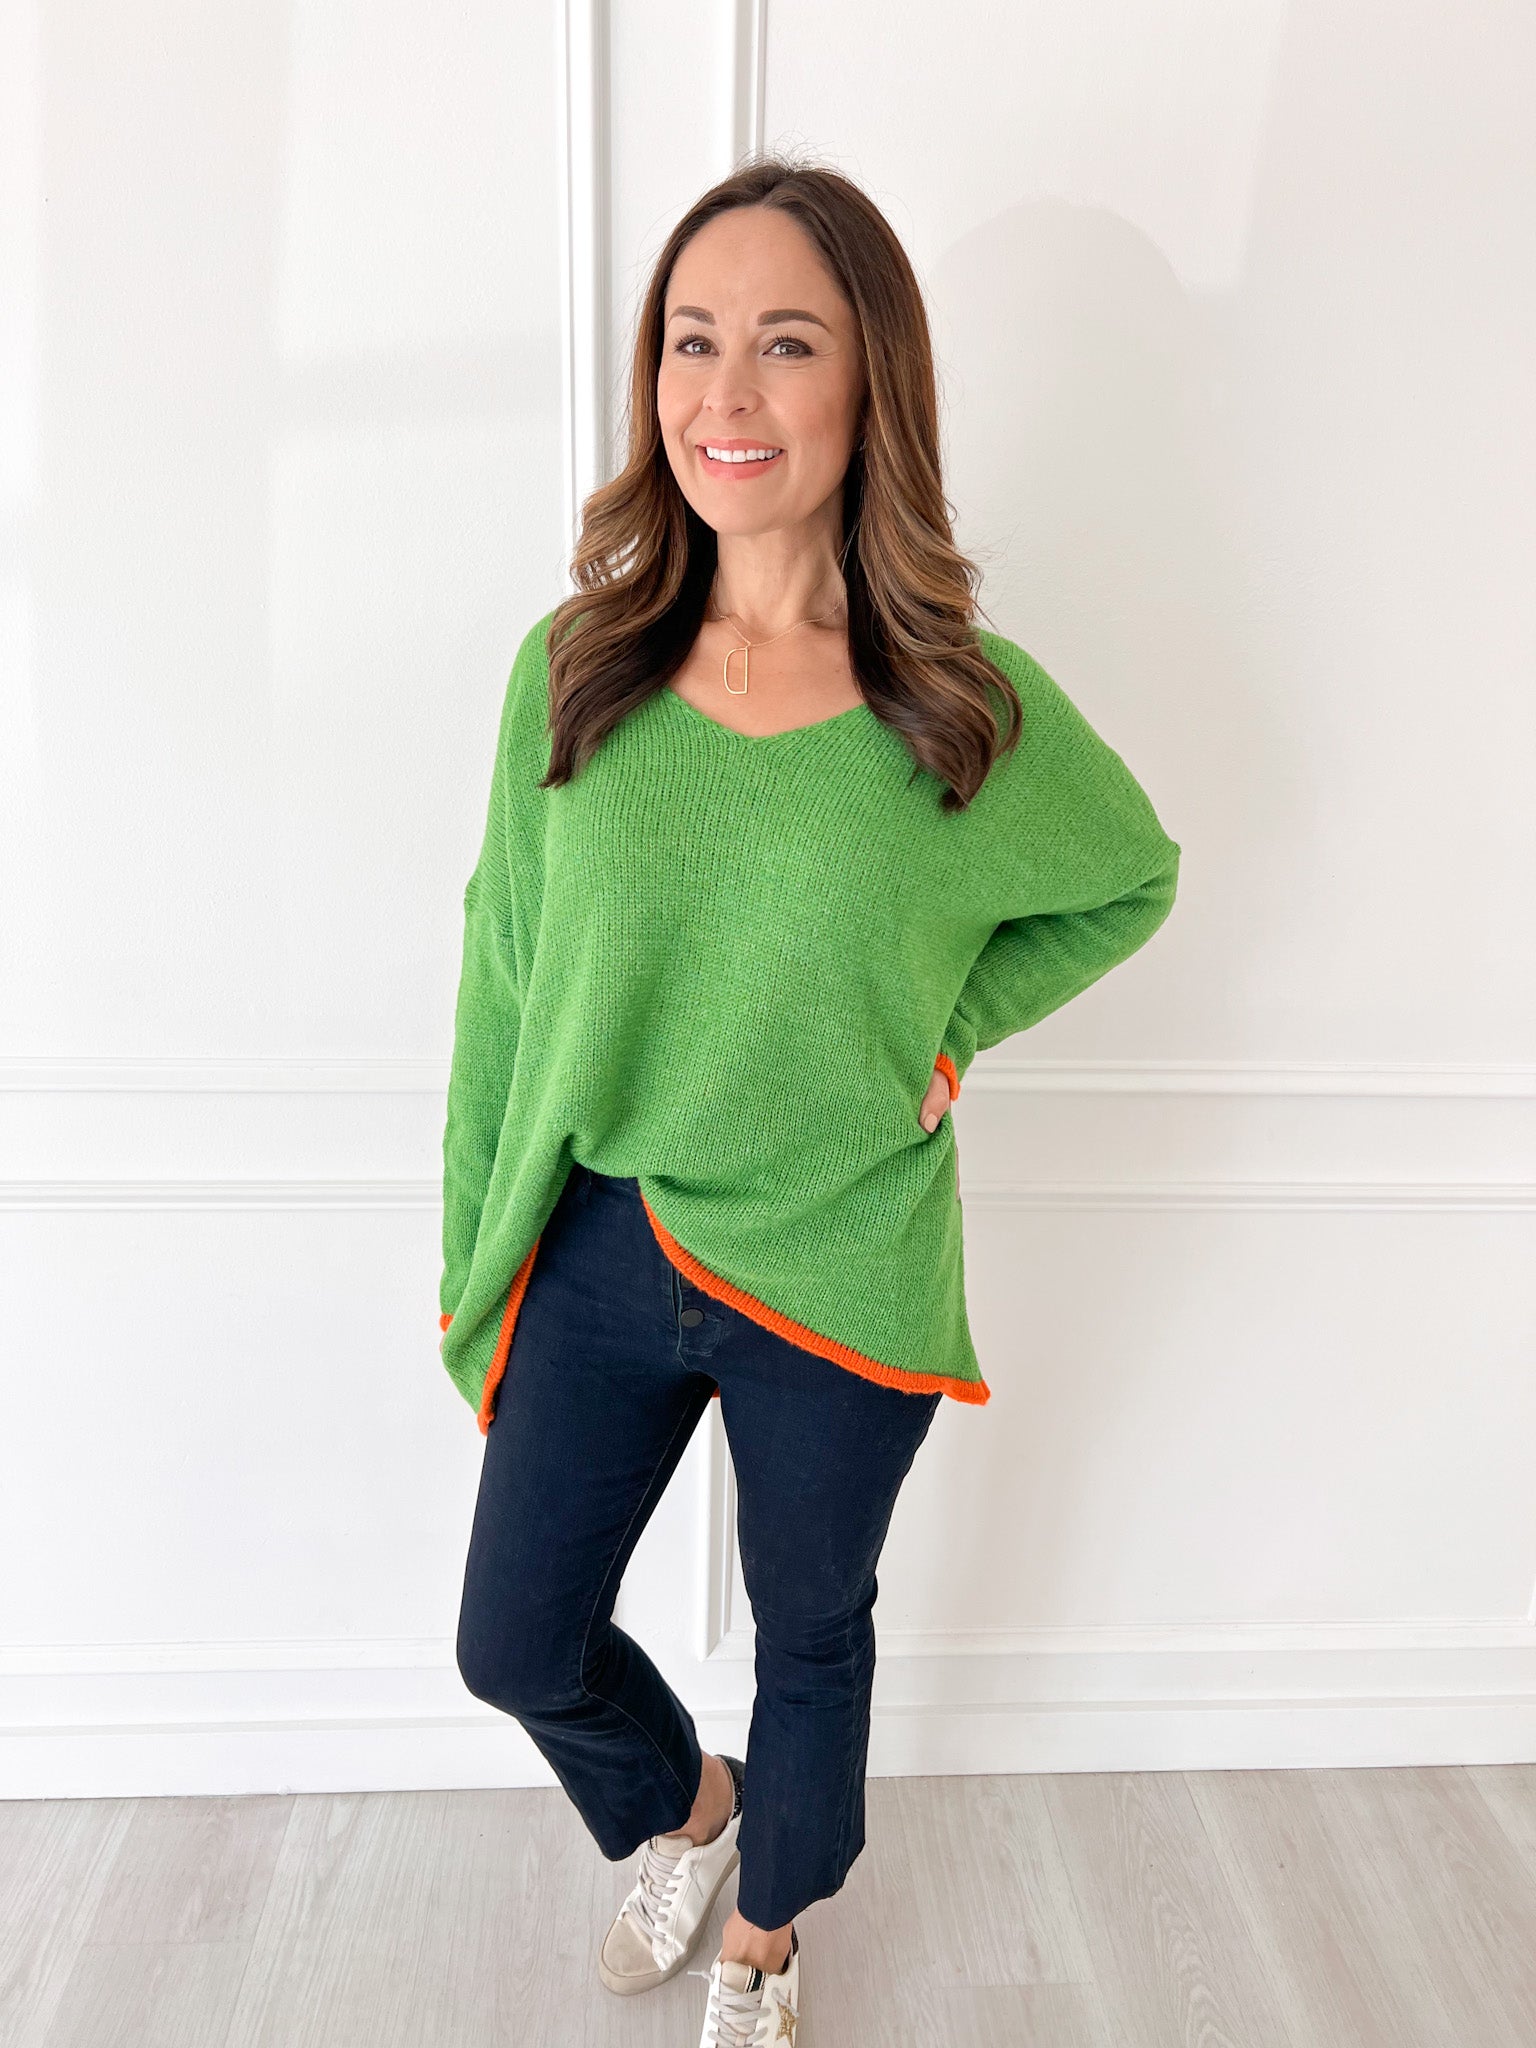 Green and Orange Sweater